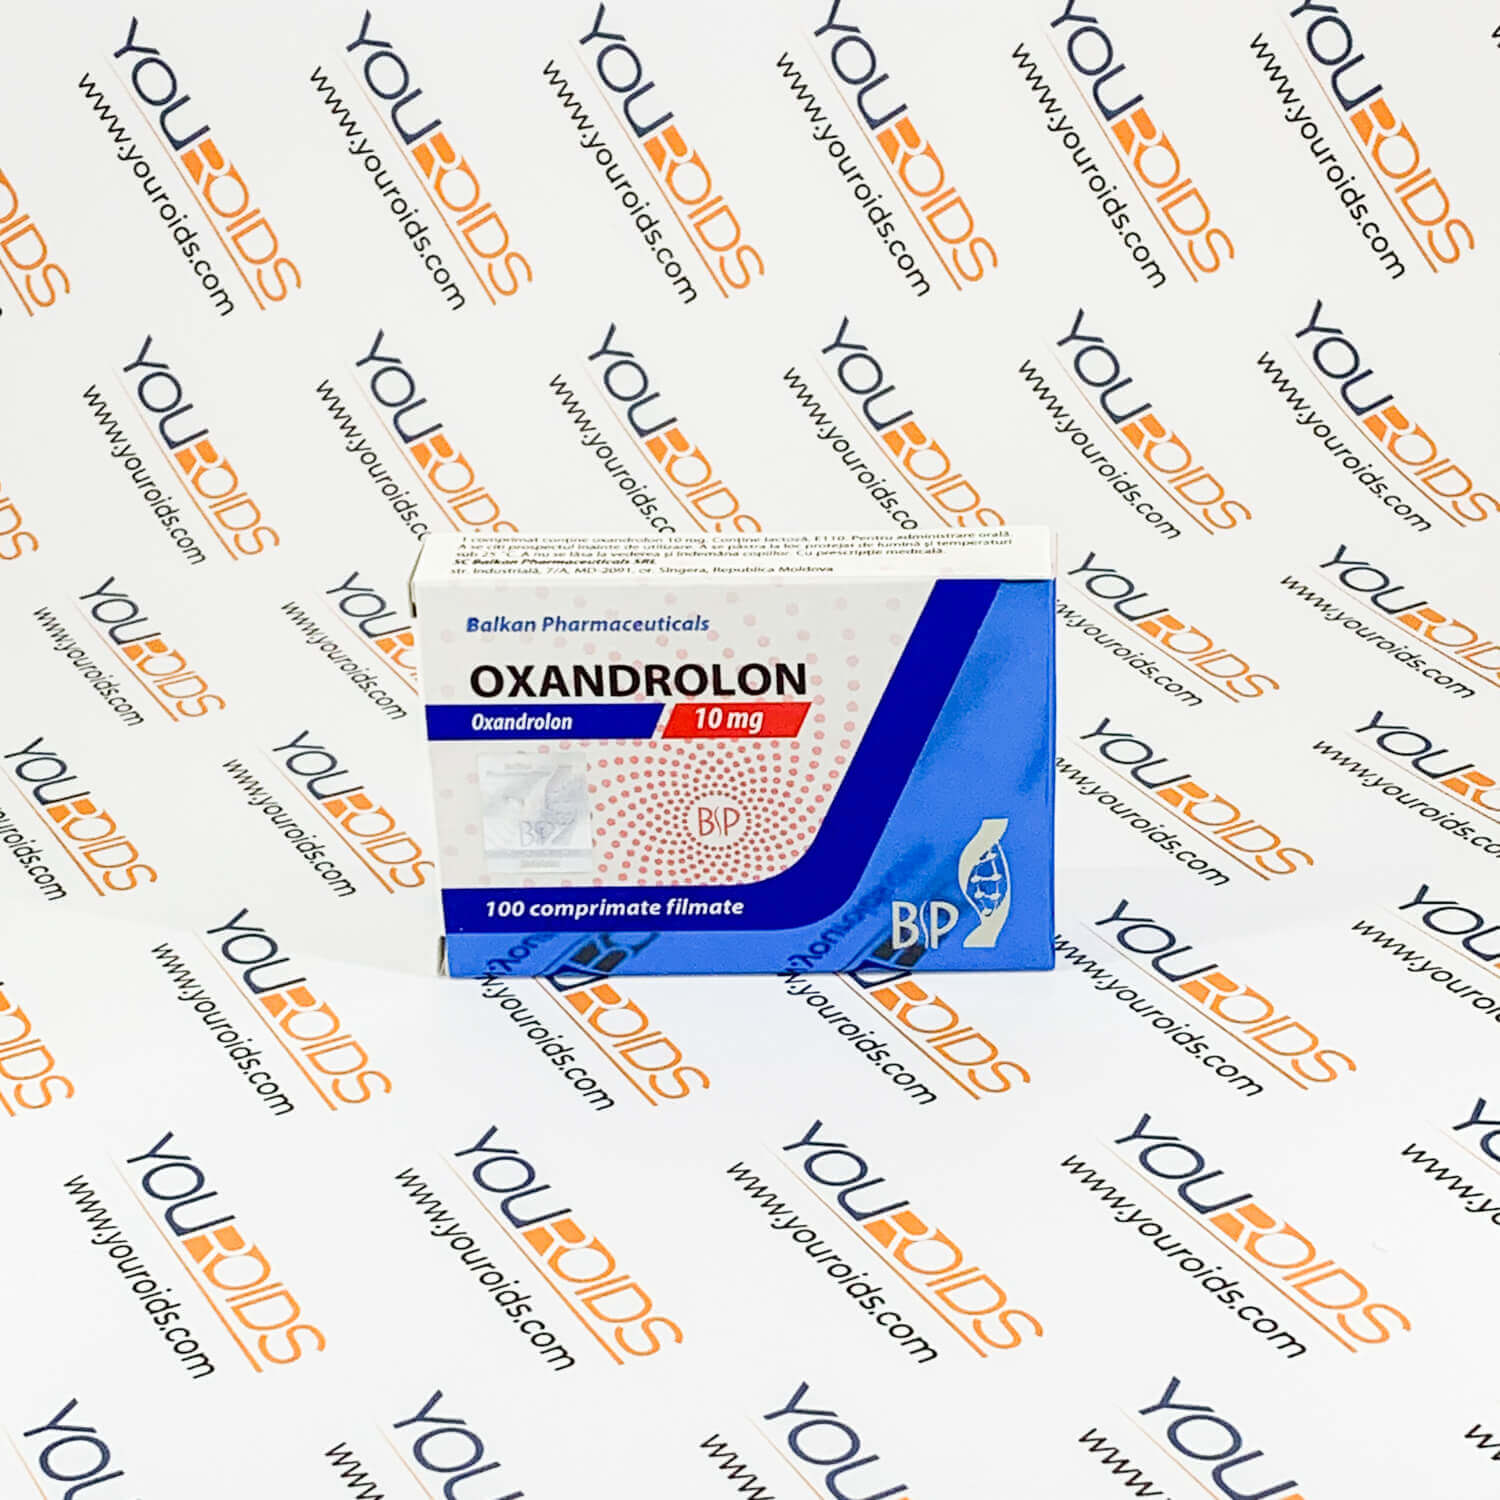 Oxandrolon 10mg pills Balkan Pharmaceuticals